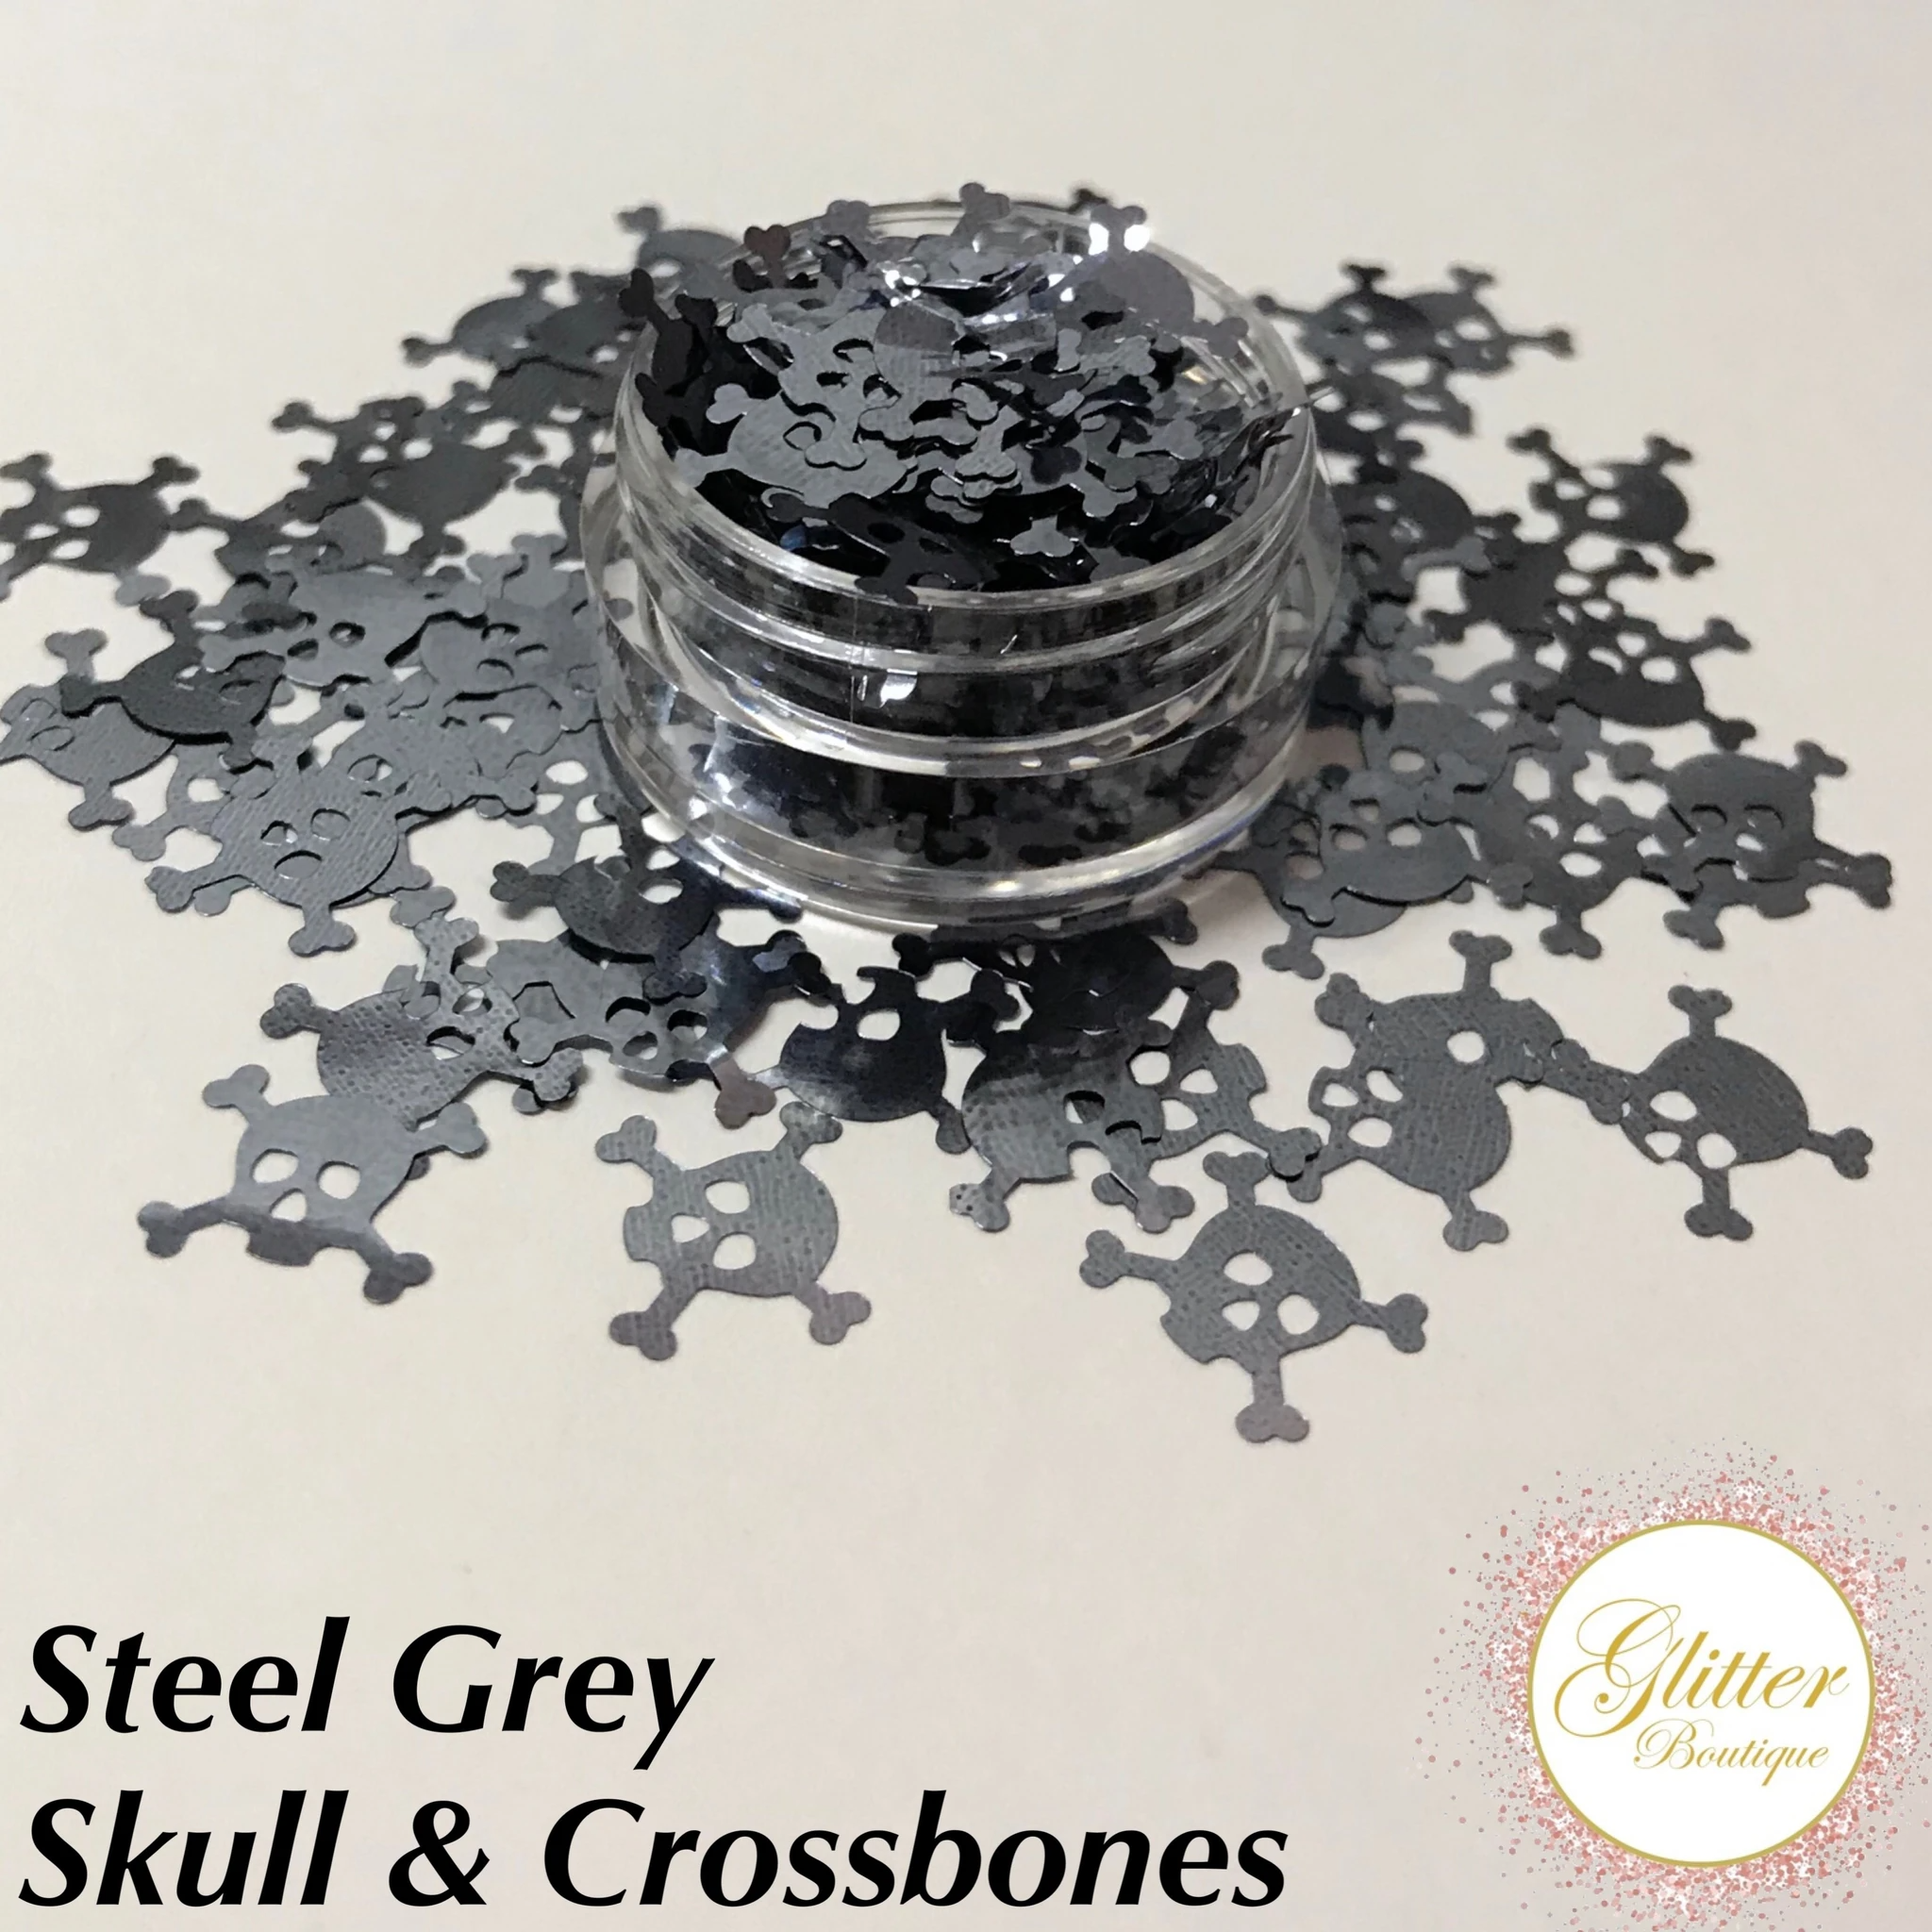 Glitter Boutique - Skull & Crossbones Steel Grey - Creata Beauty - Professional Beauty Products